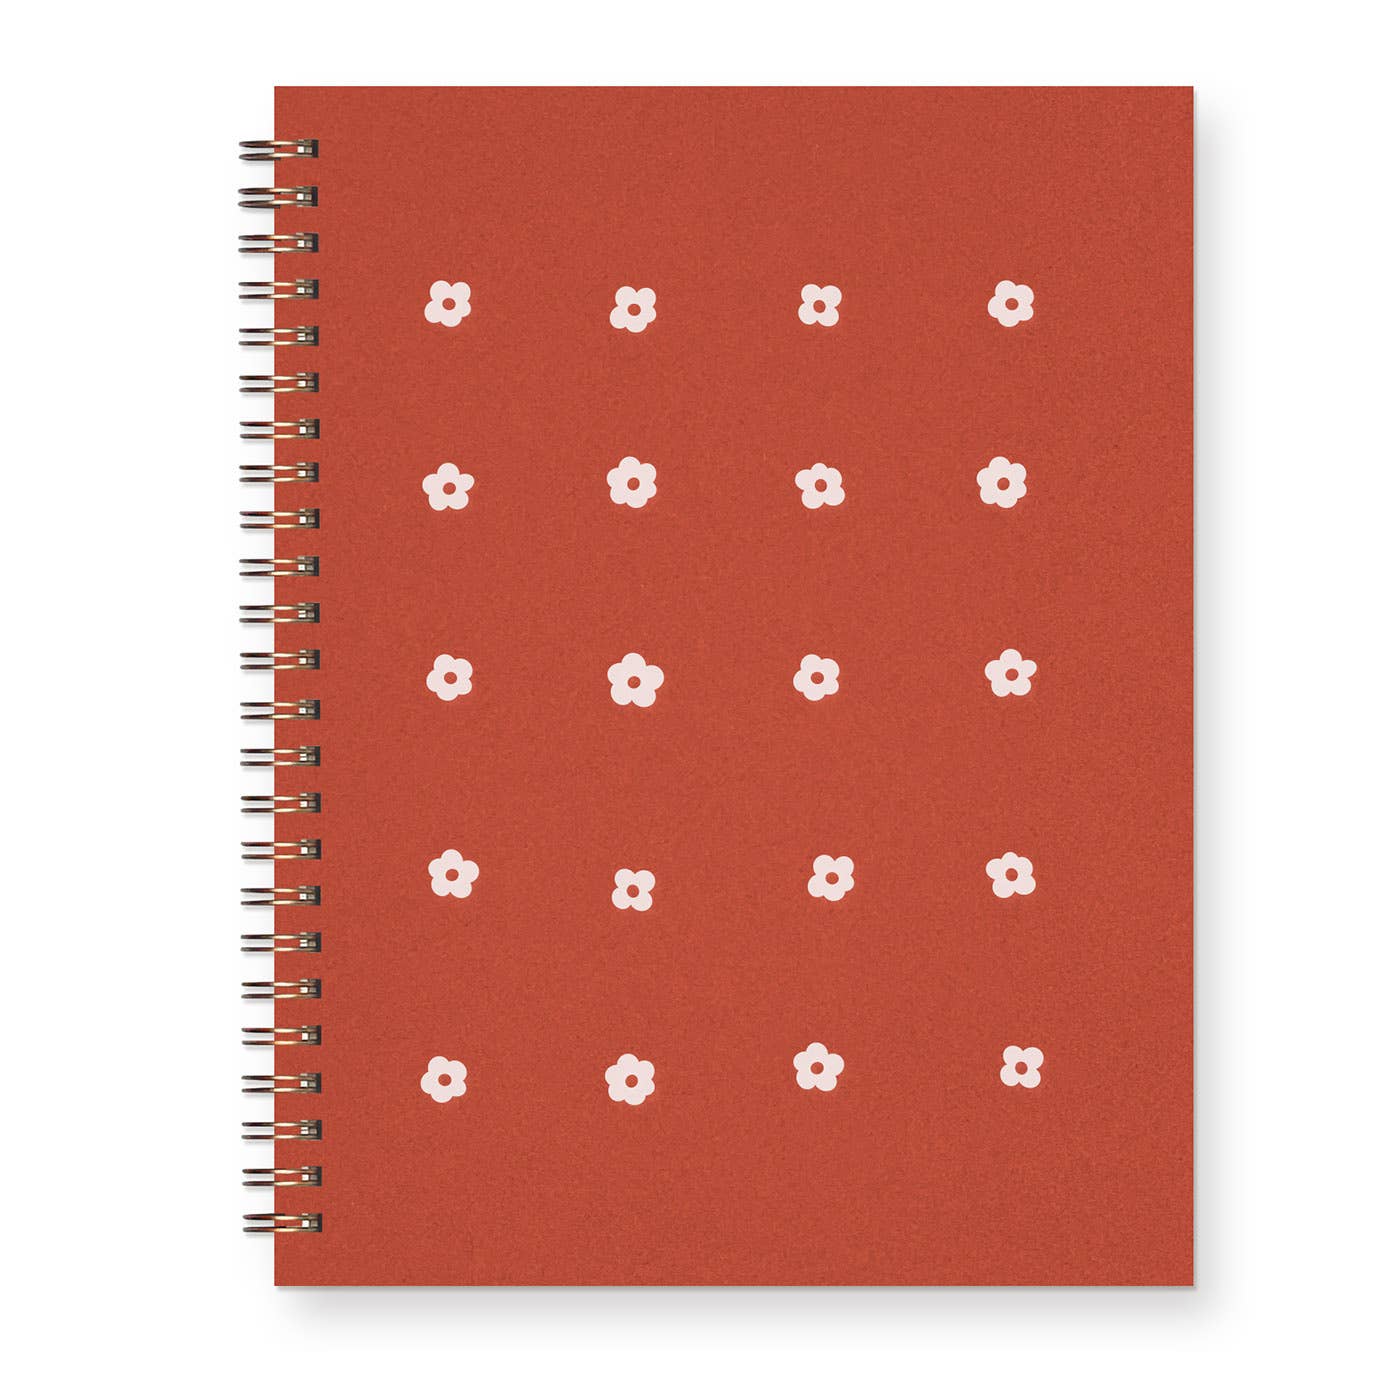 Flower Grid Journal: Lined Notebook